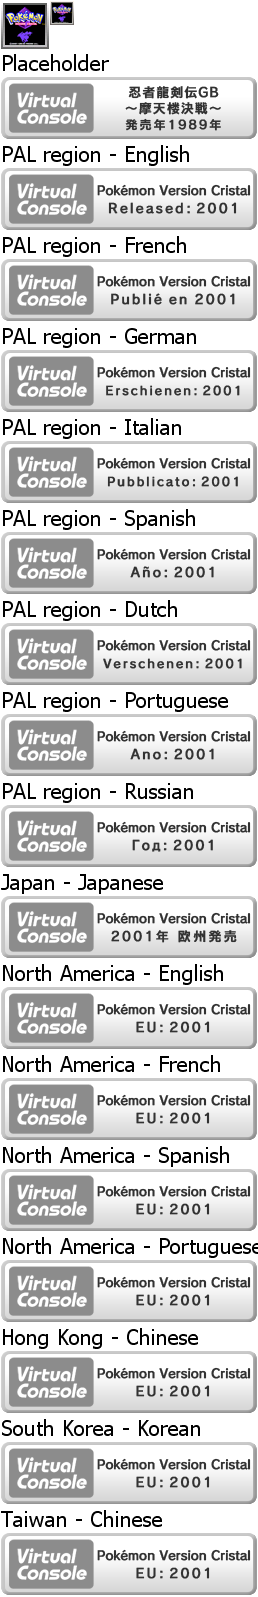 Virtual Console - Pokémon Version Cristal